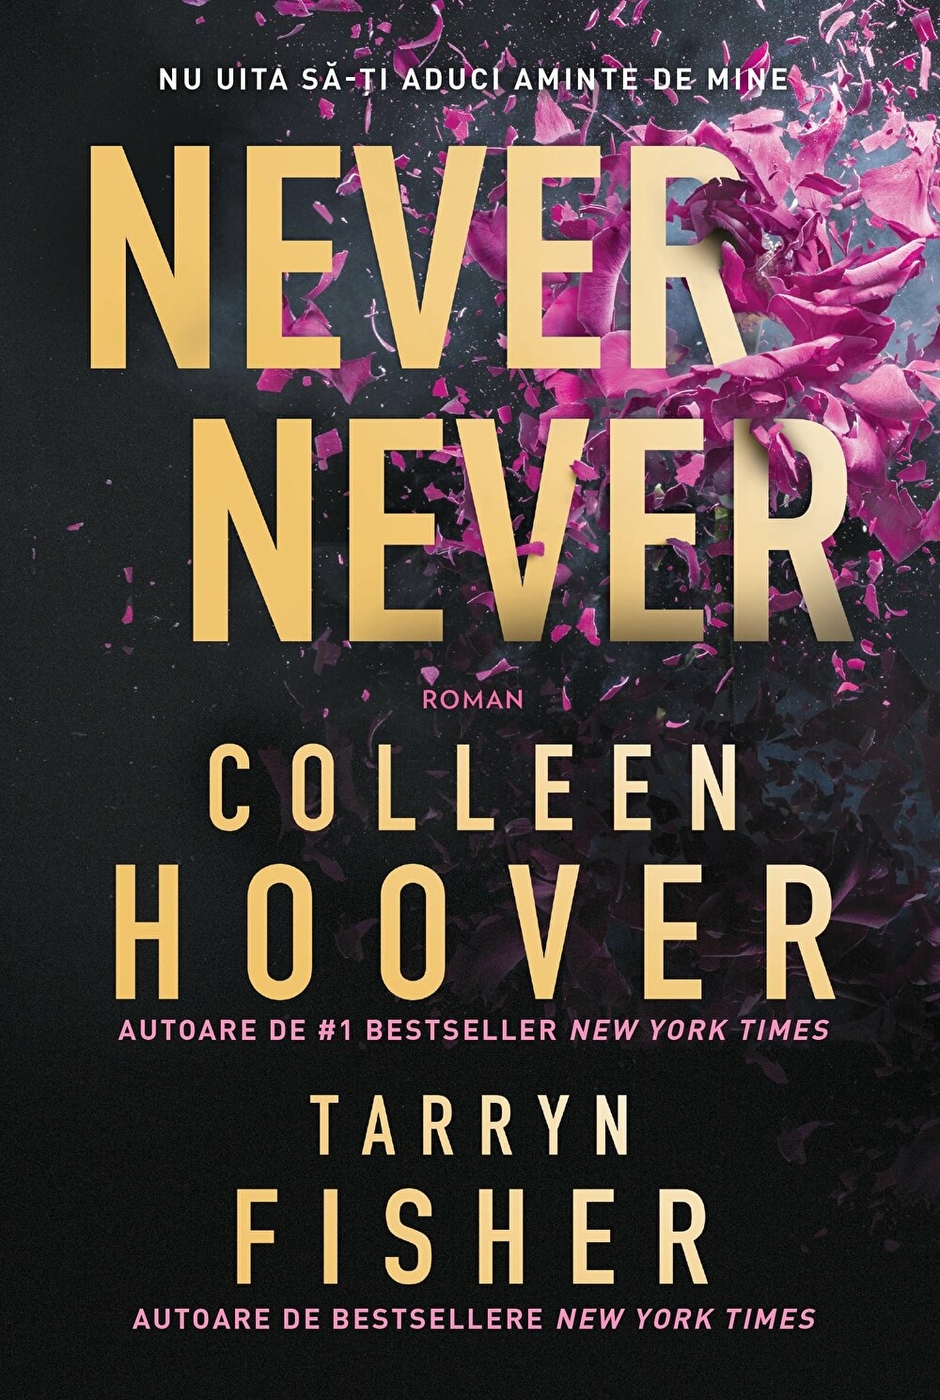 Colleen Hoover, Tarryn Fisher